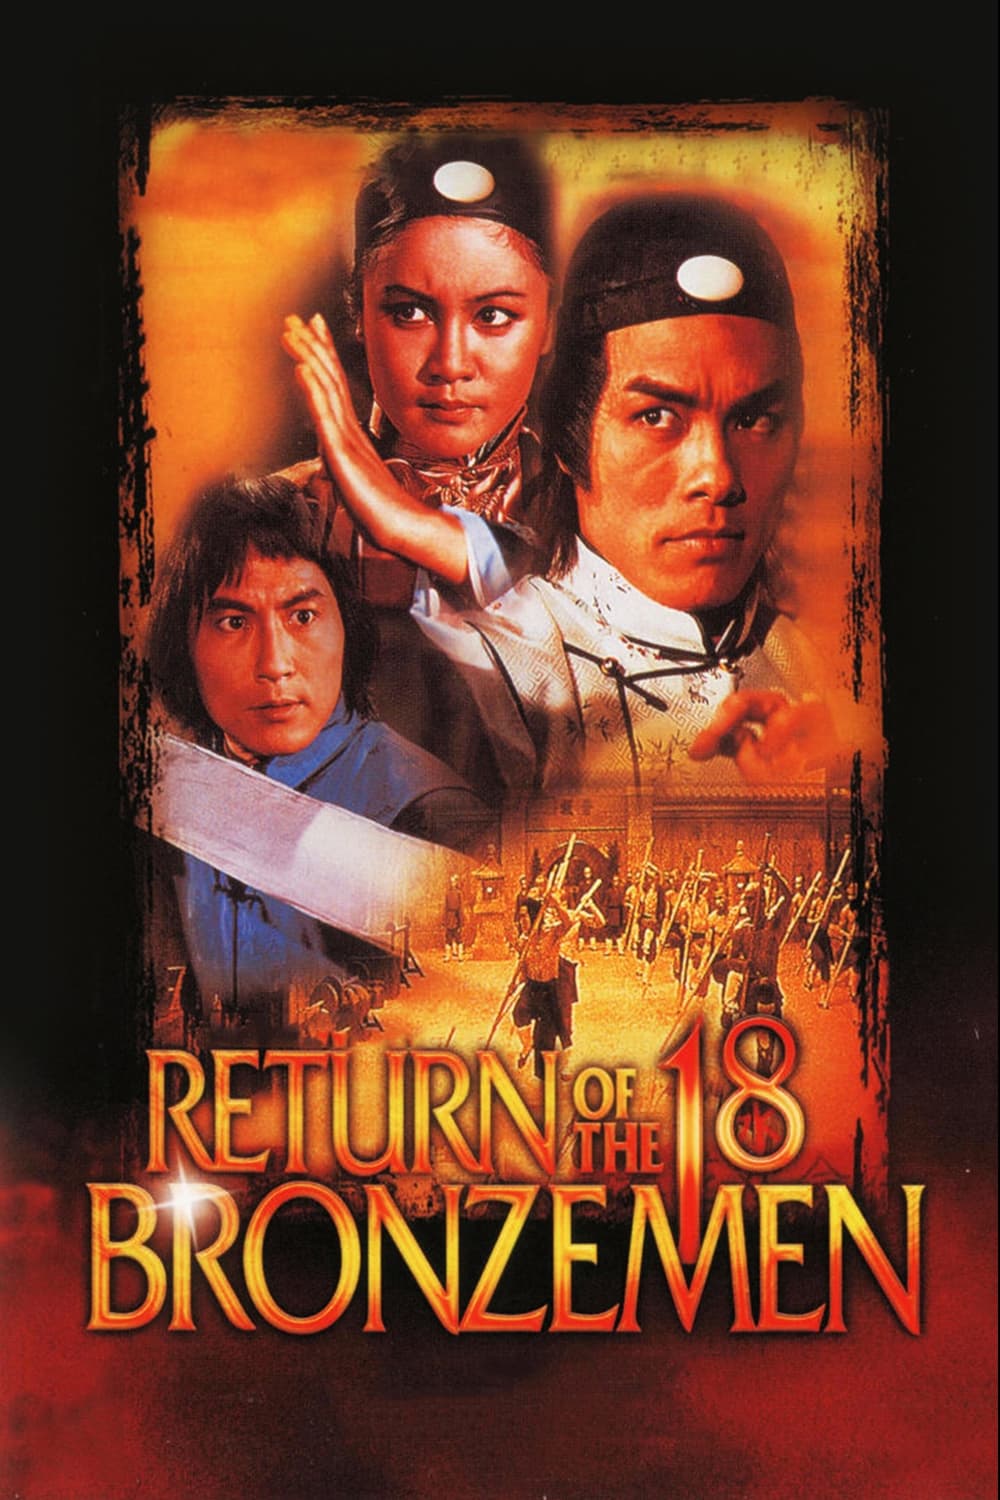 Return of the 18 Bronzemen (1976)